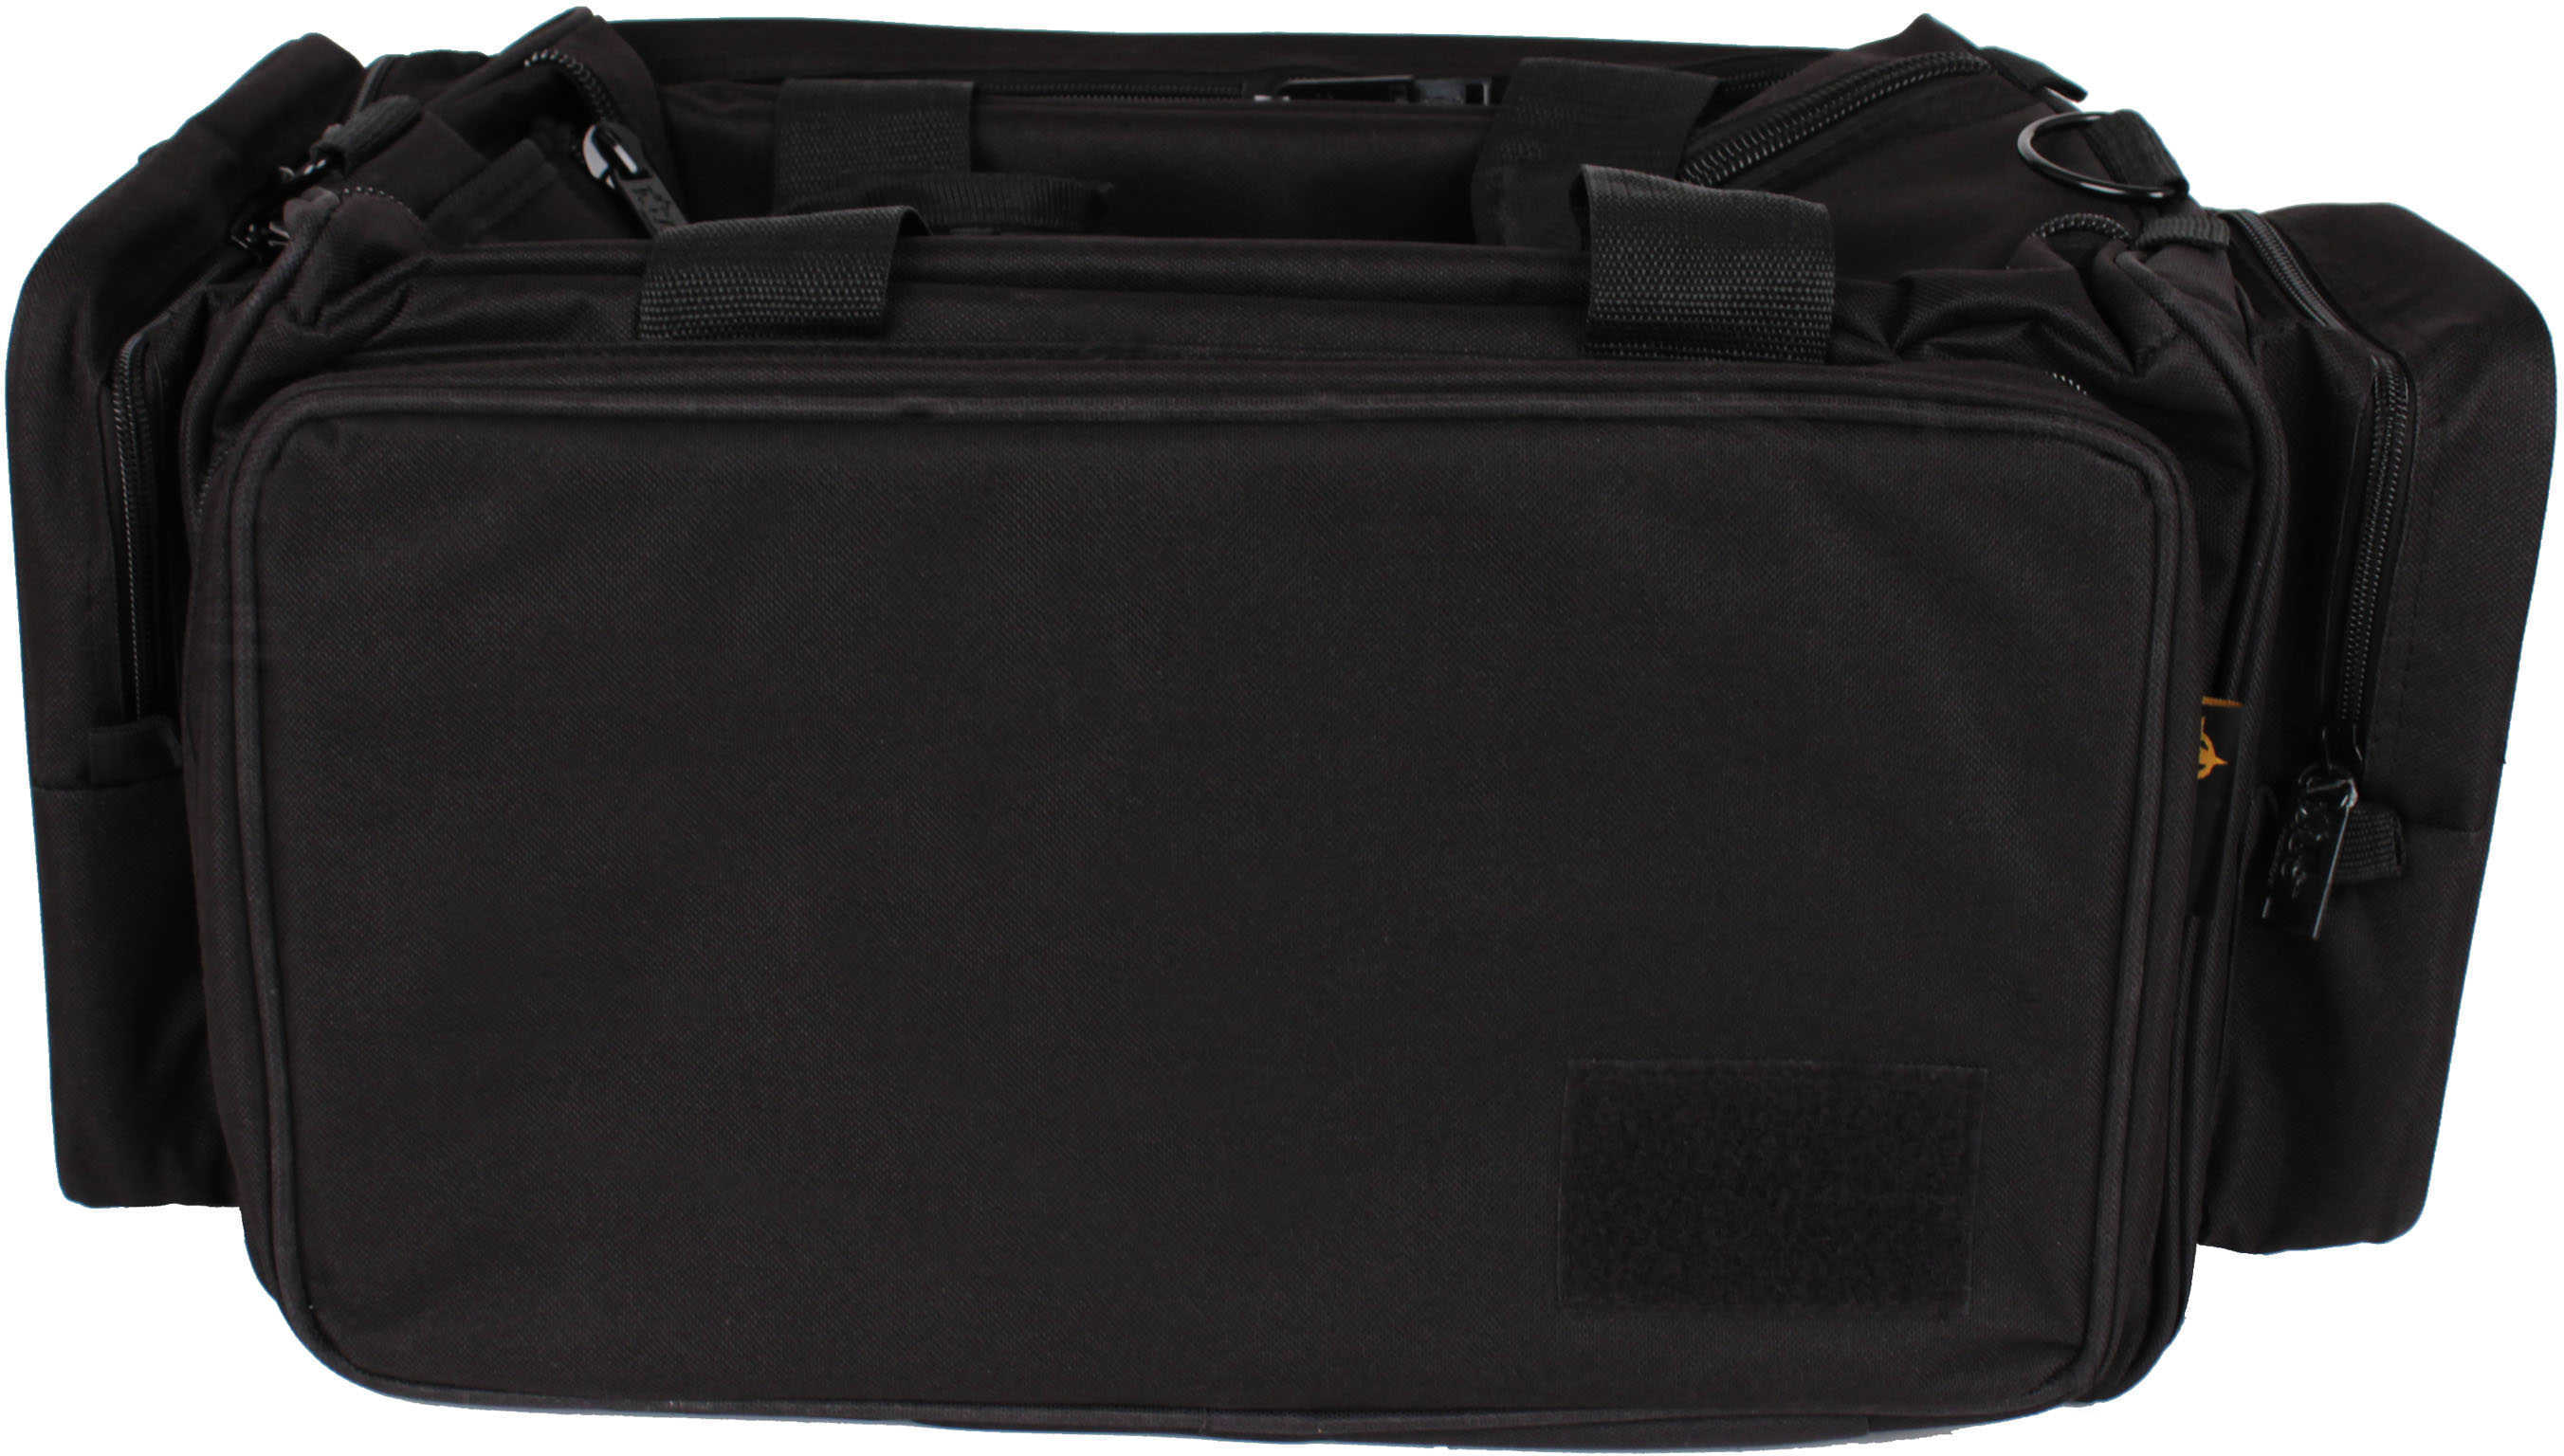 US Peacekeeper Competitor Range Bag 24" x 12" x 11.5" Black N55111